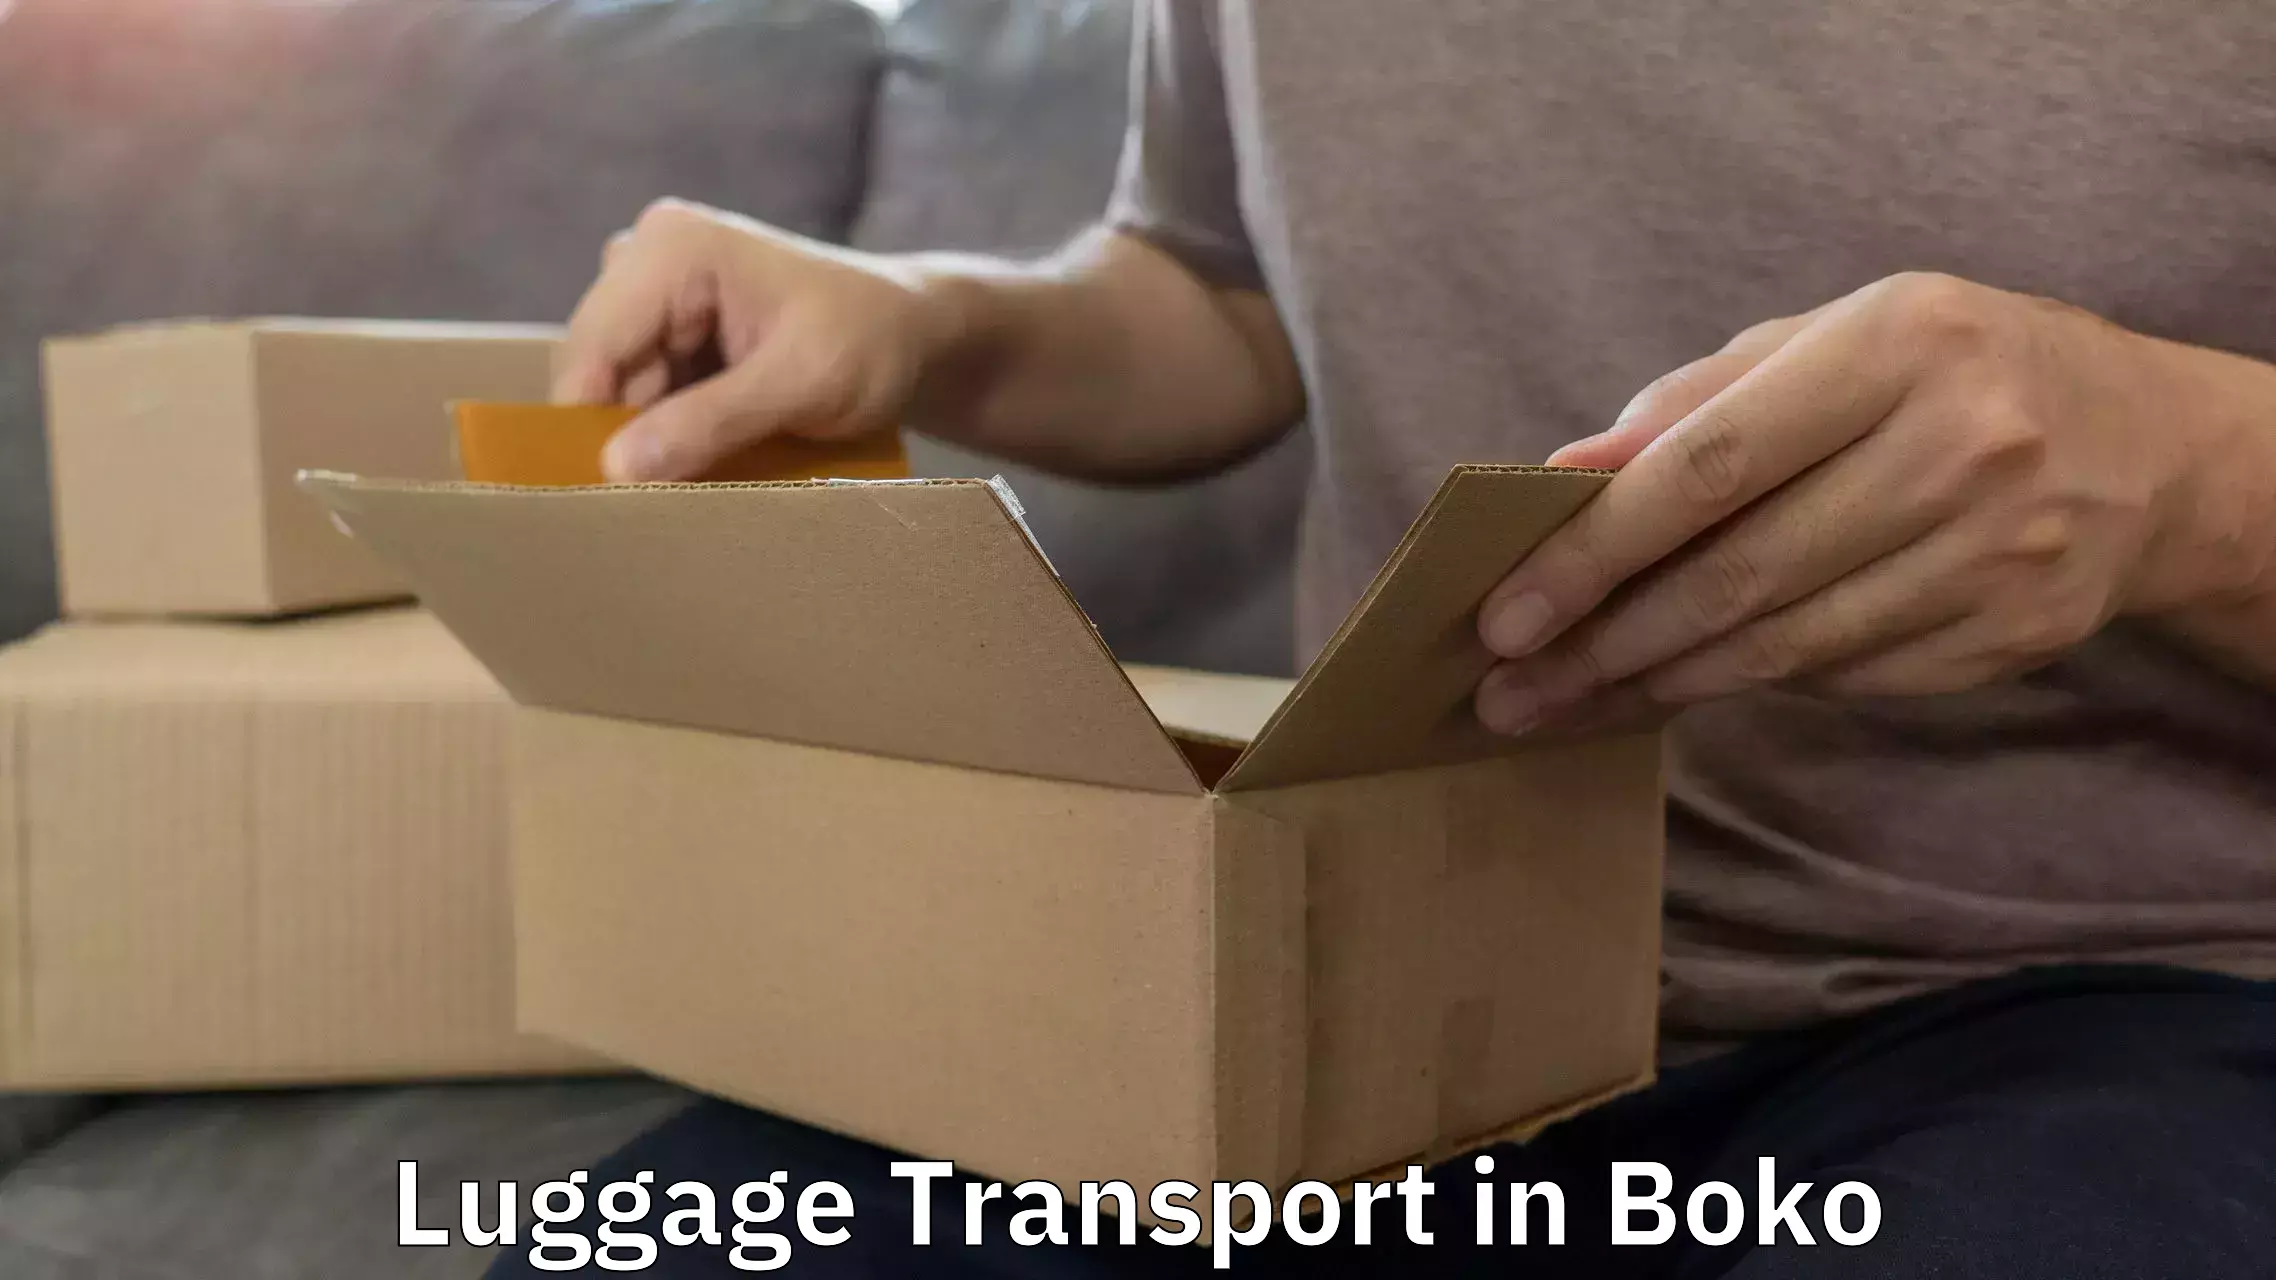 Overnight baggage shipping in Boko